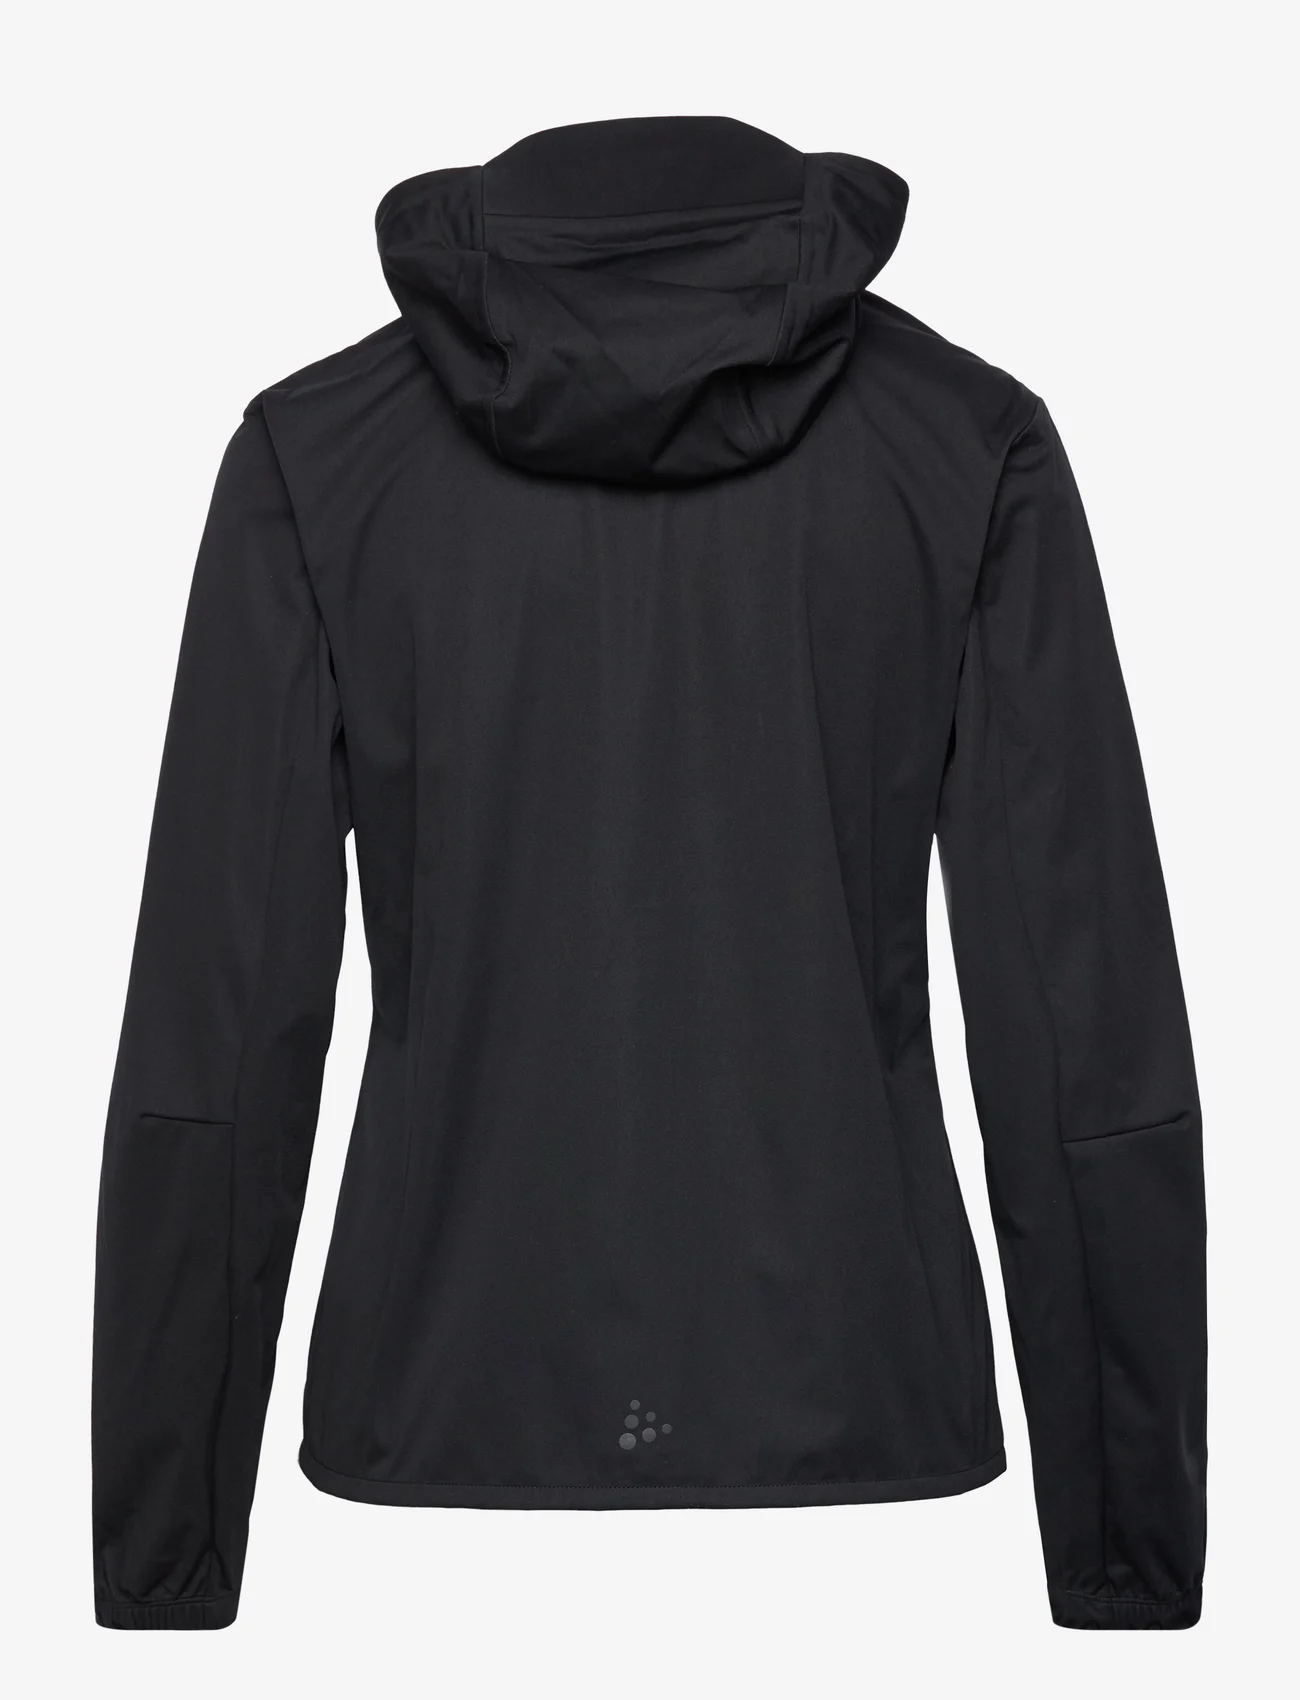 Craft - ADV Essence Hydro Jacket W - sports jackets - black - 1